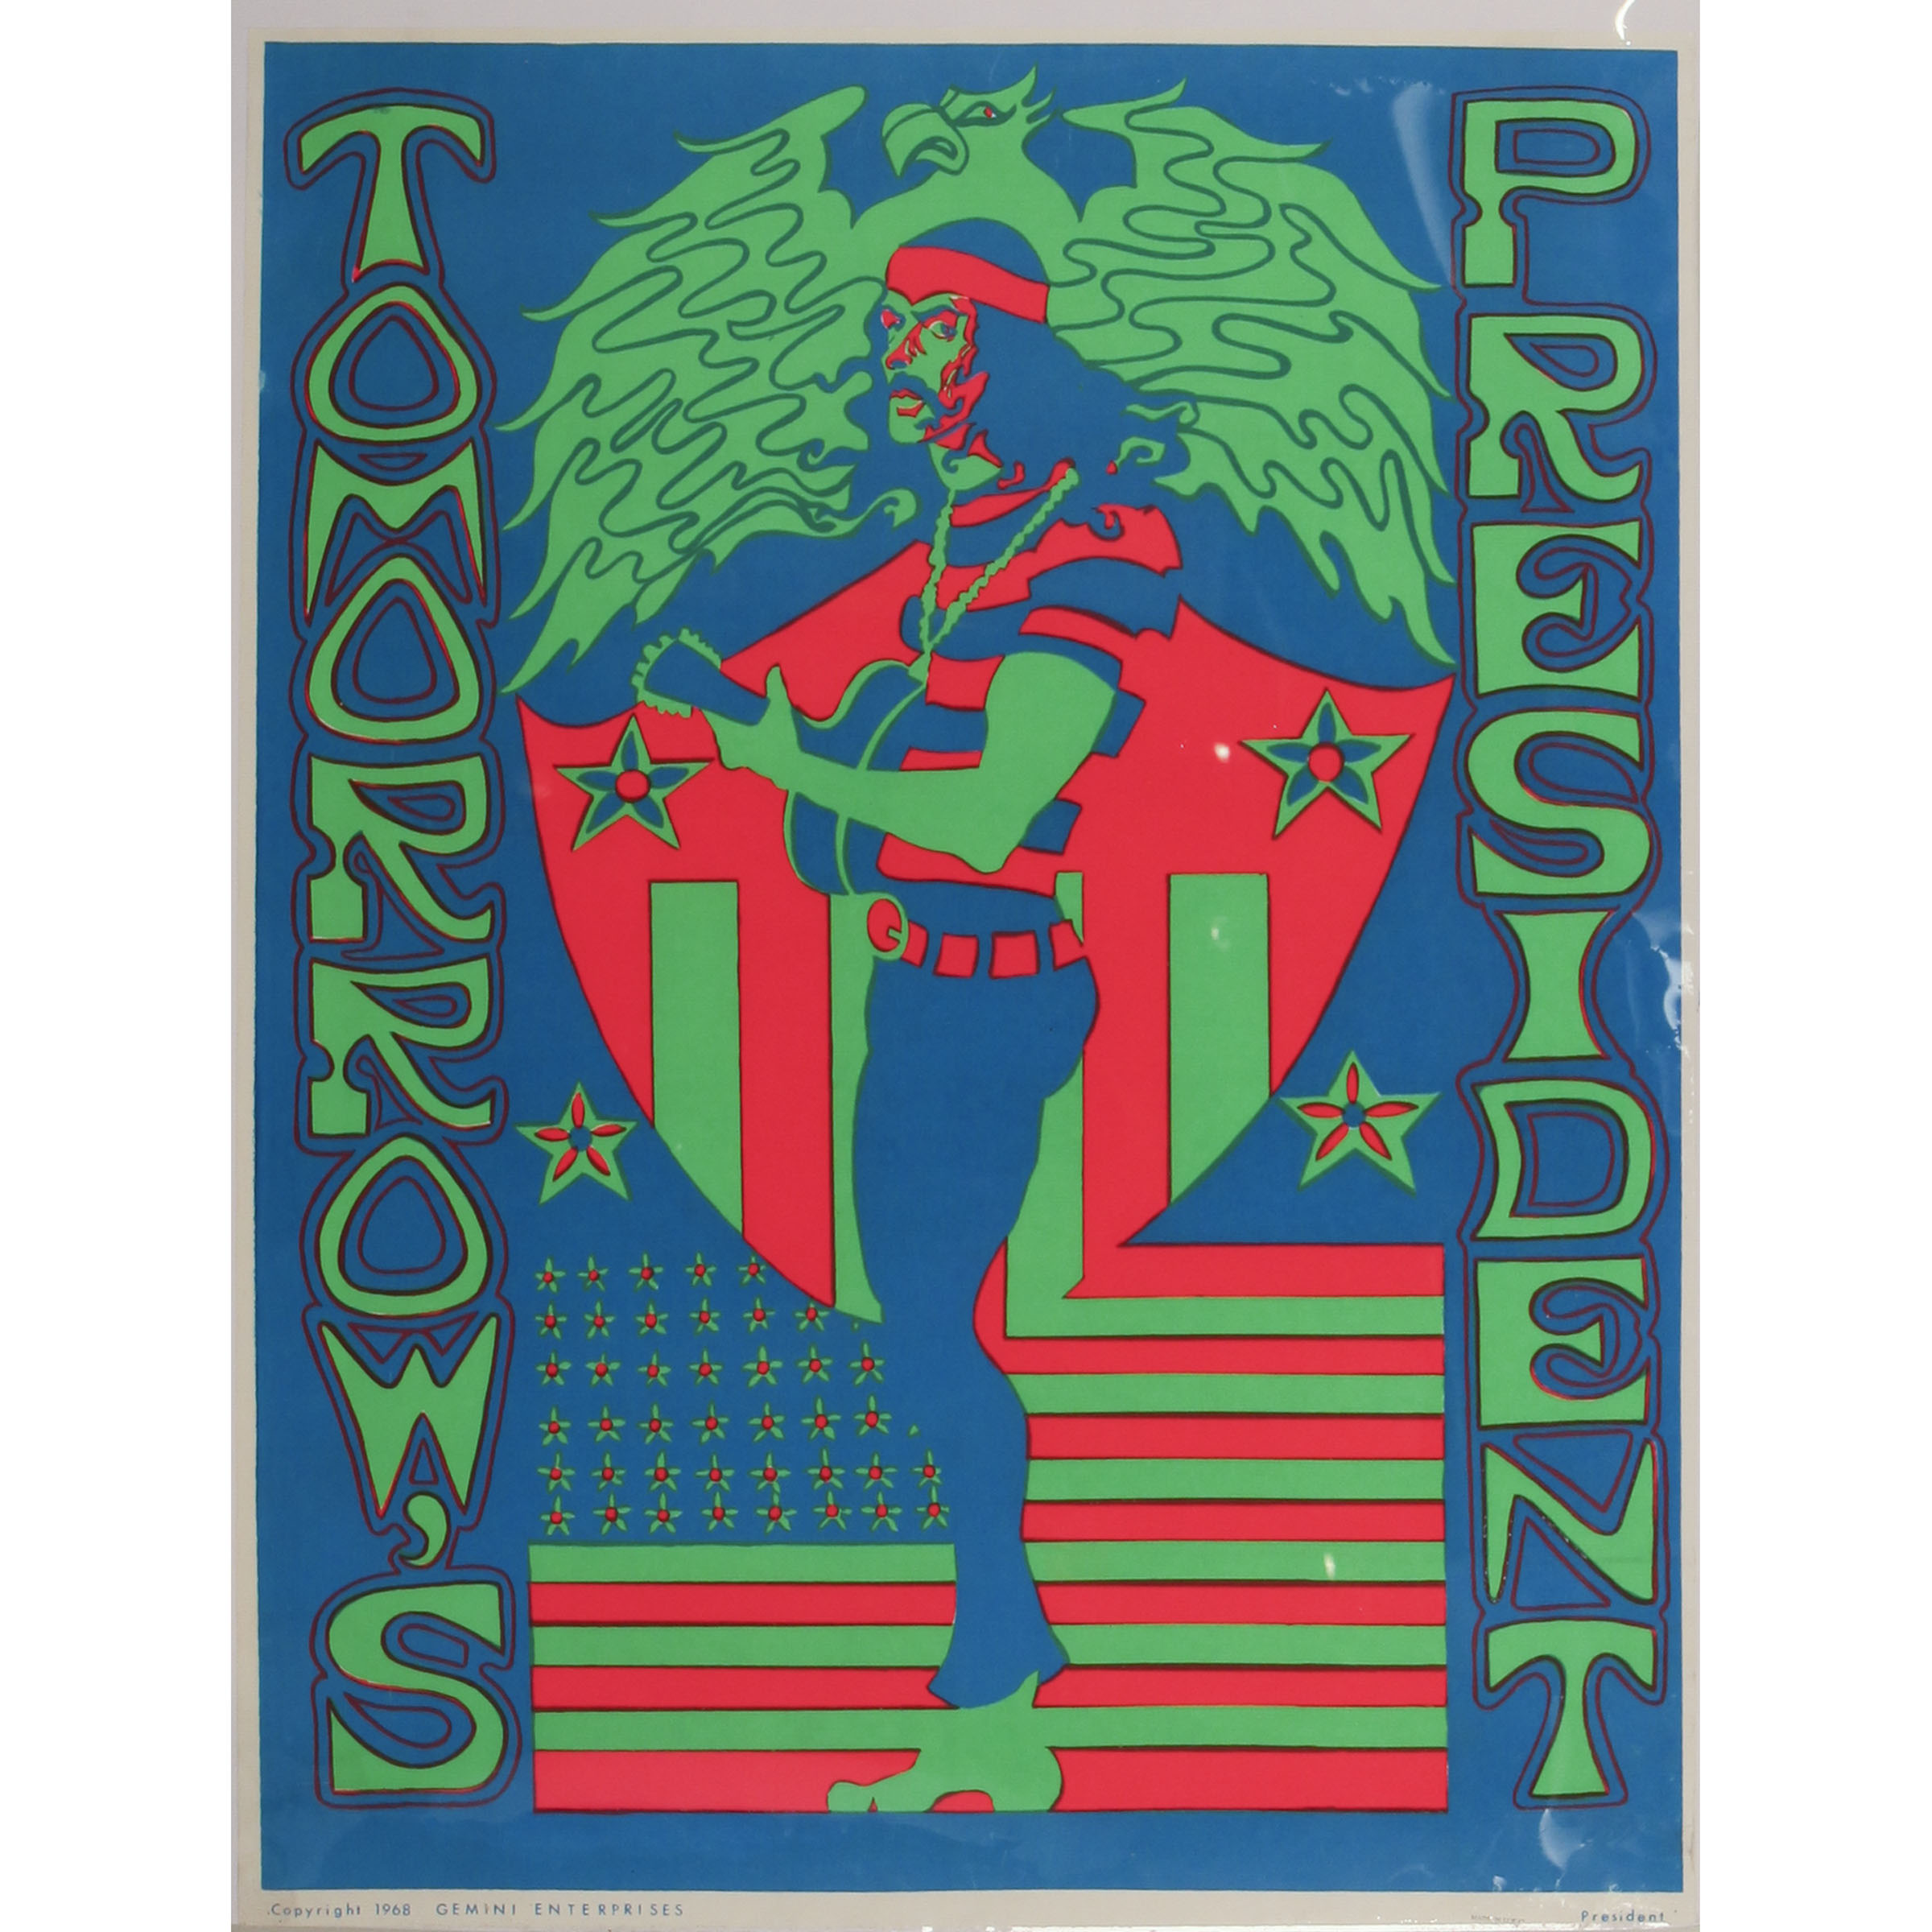 Tomorrow’s President Poster, 1968